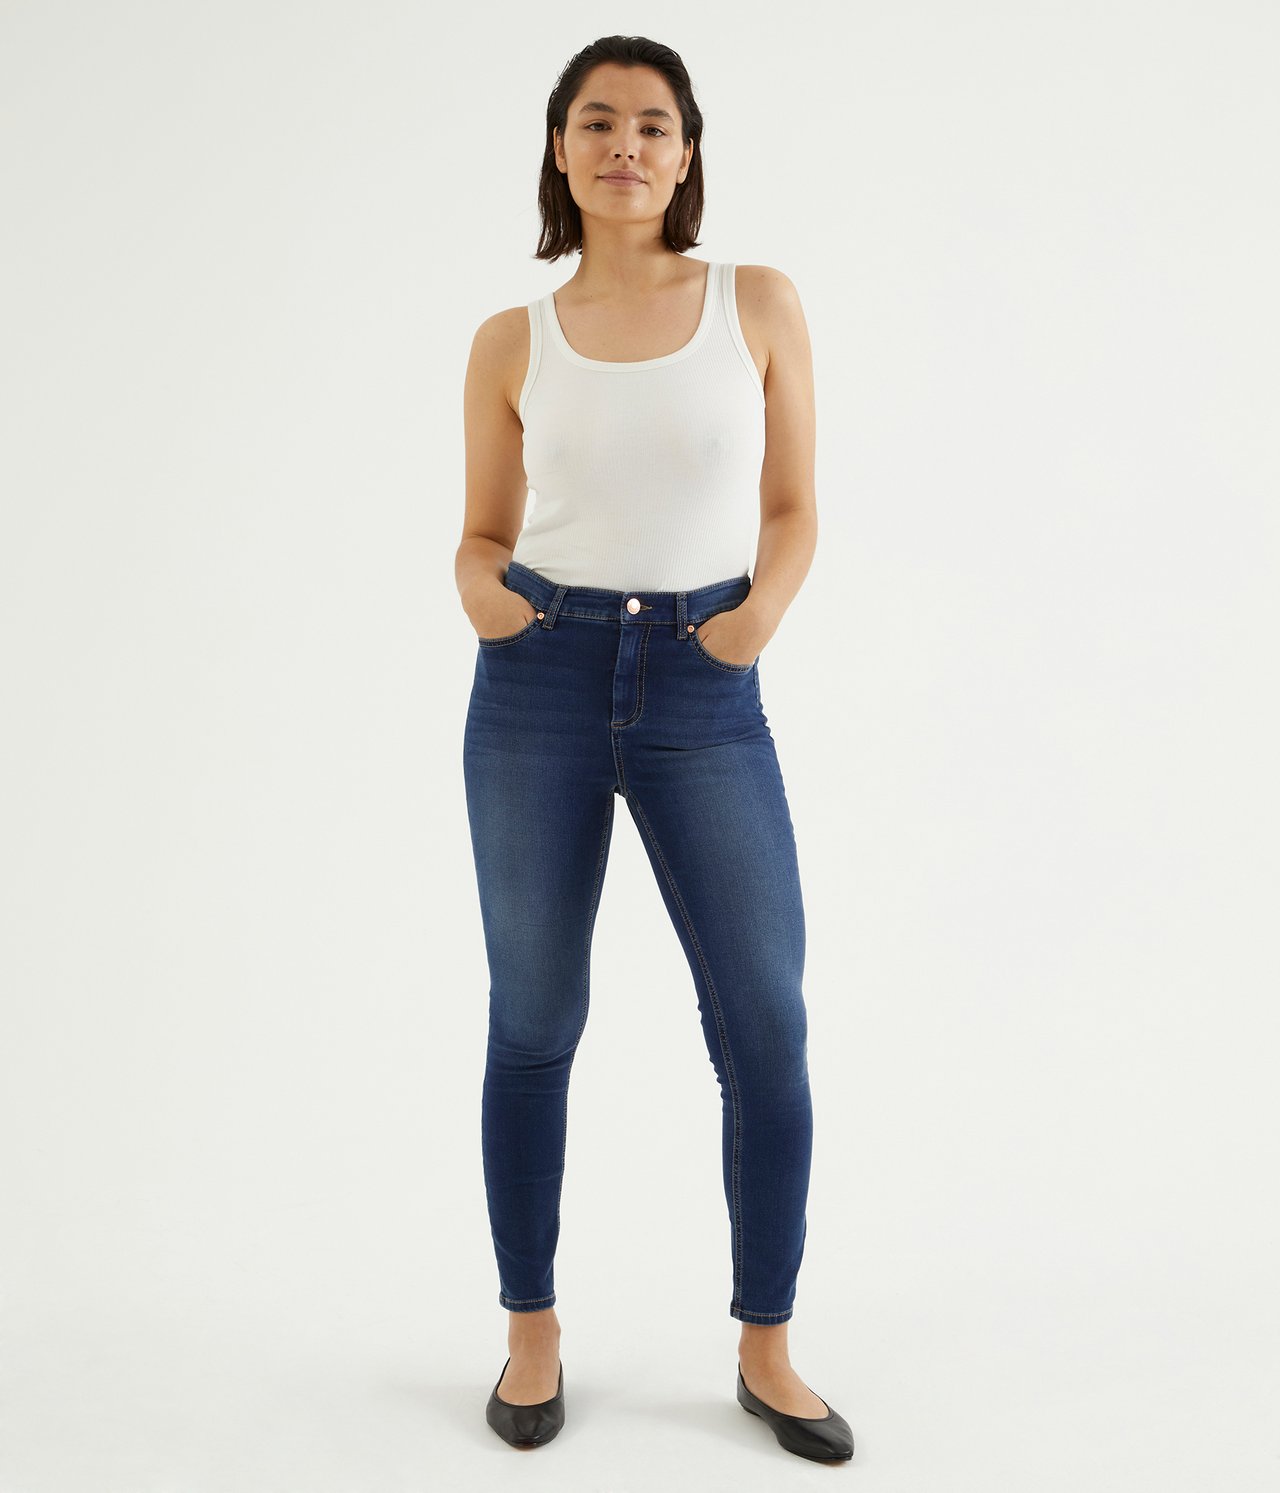 Super slim jeans short leg - Mörk denim - 1